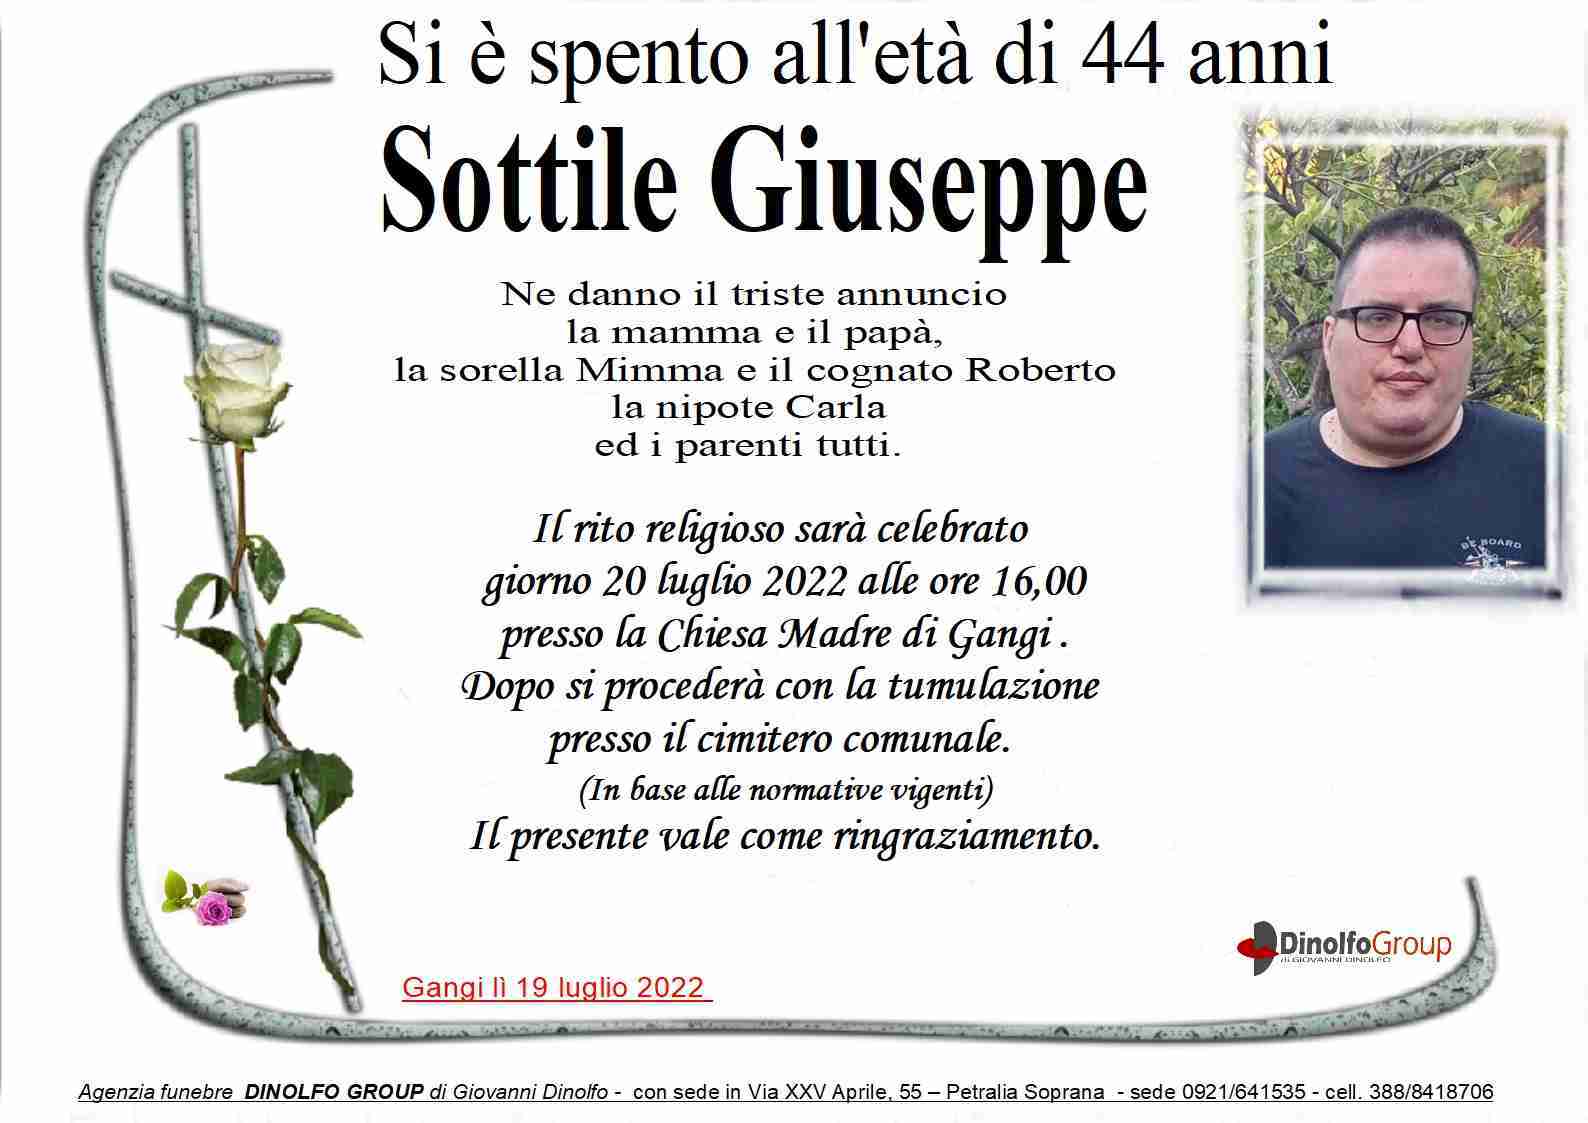 Giuseppe Sottile